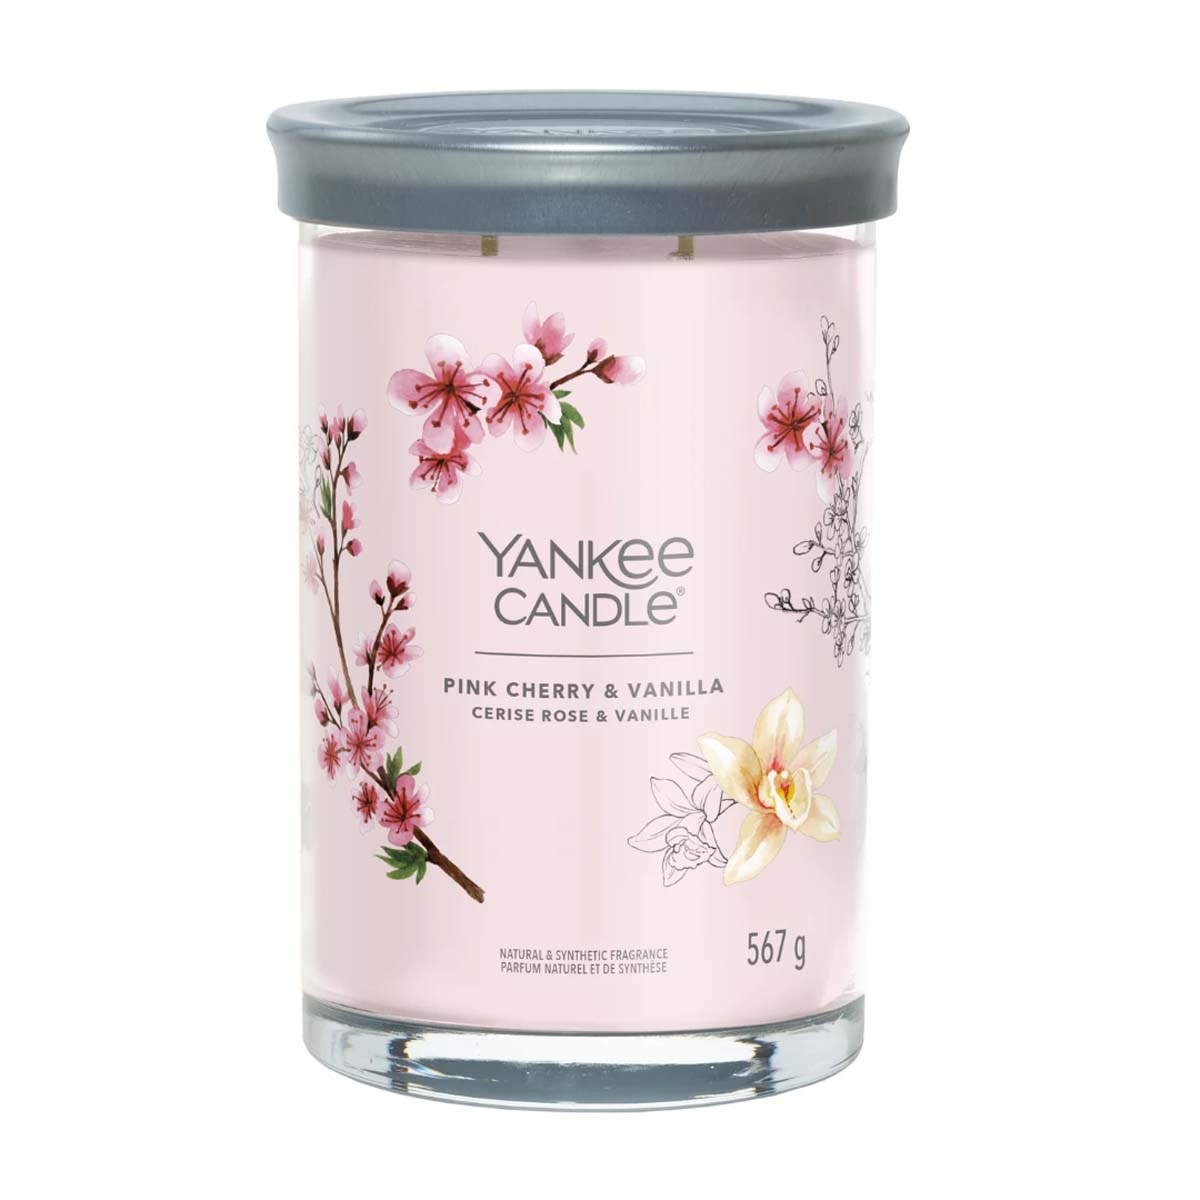 Yankee Candle Signature Linea Pink Cherry & Vanilla